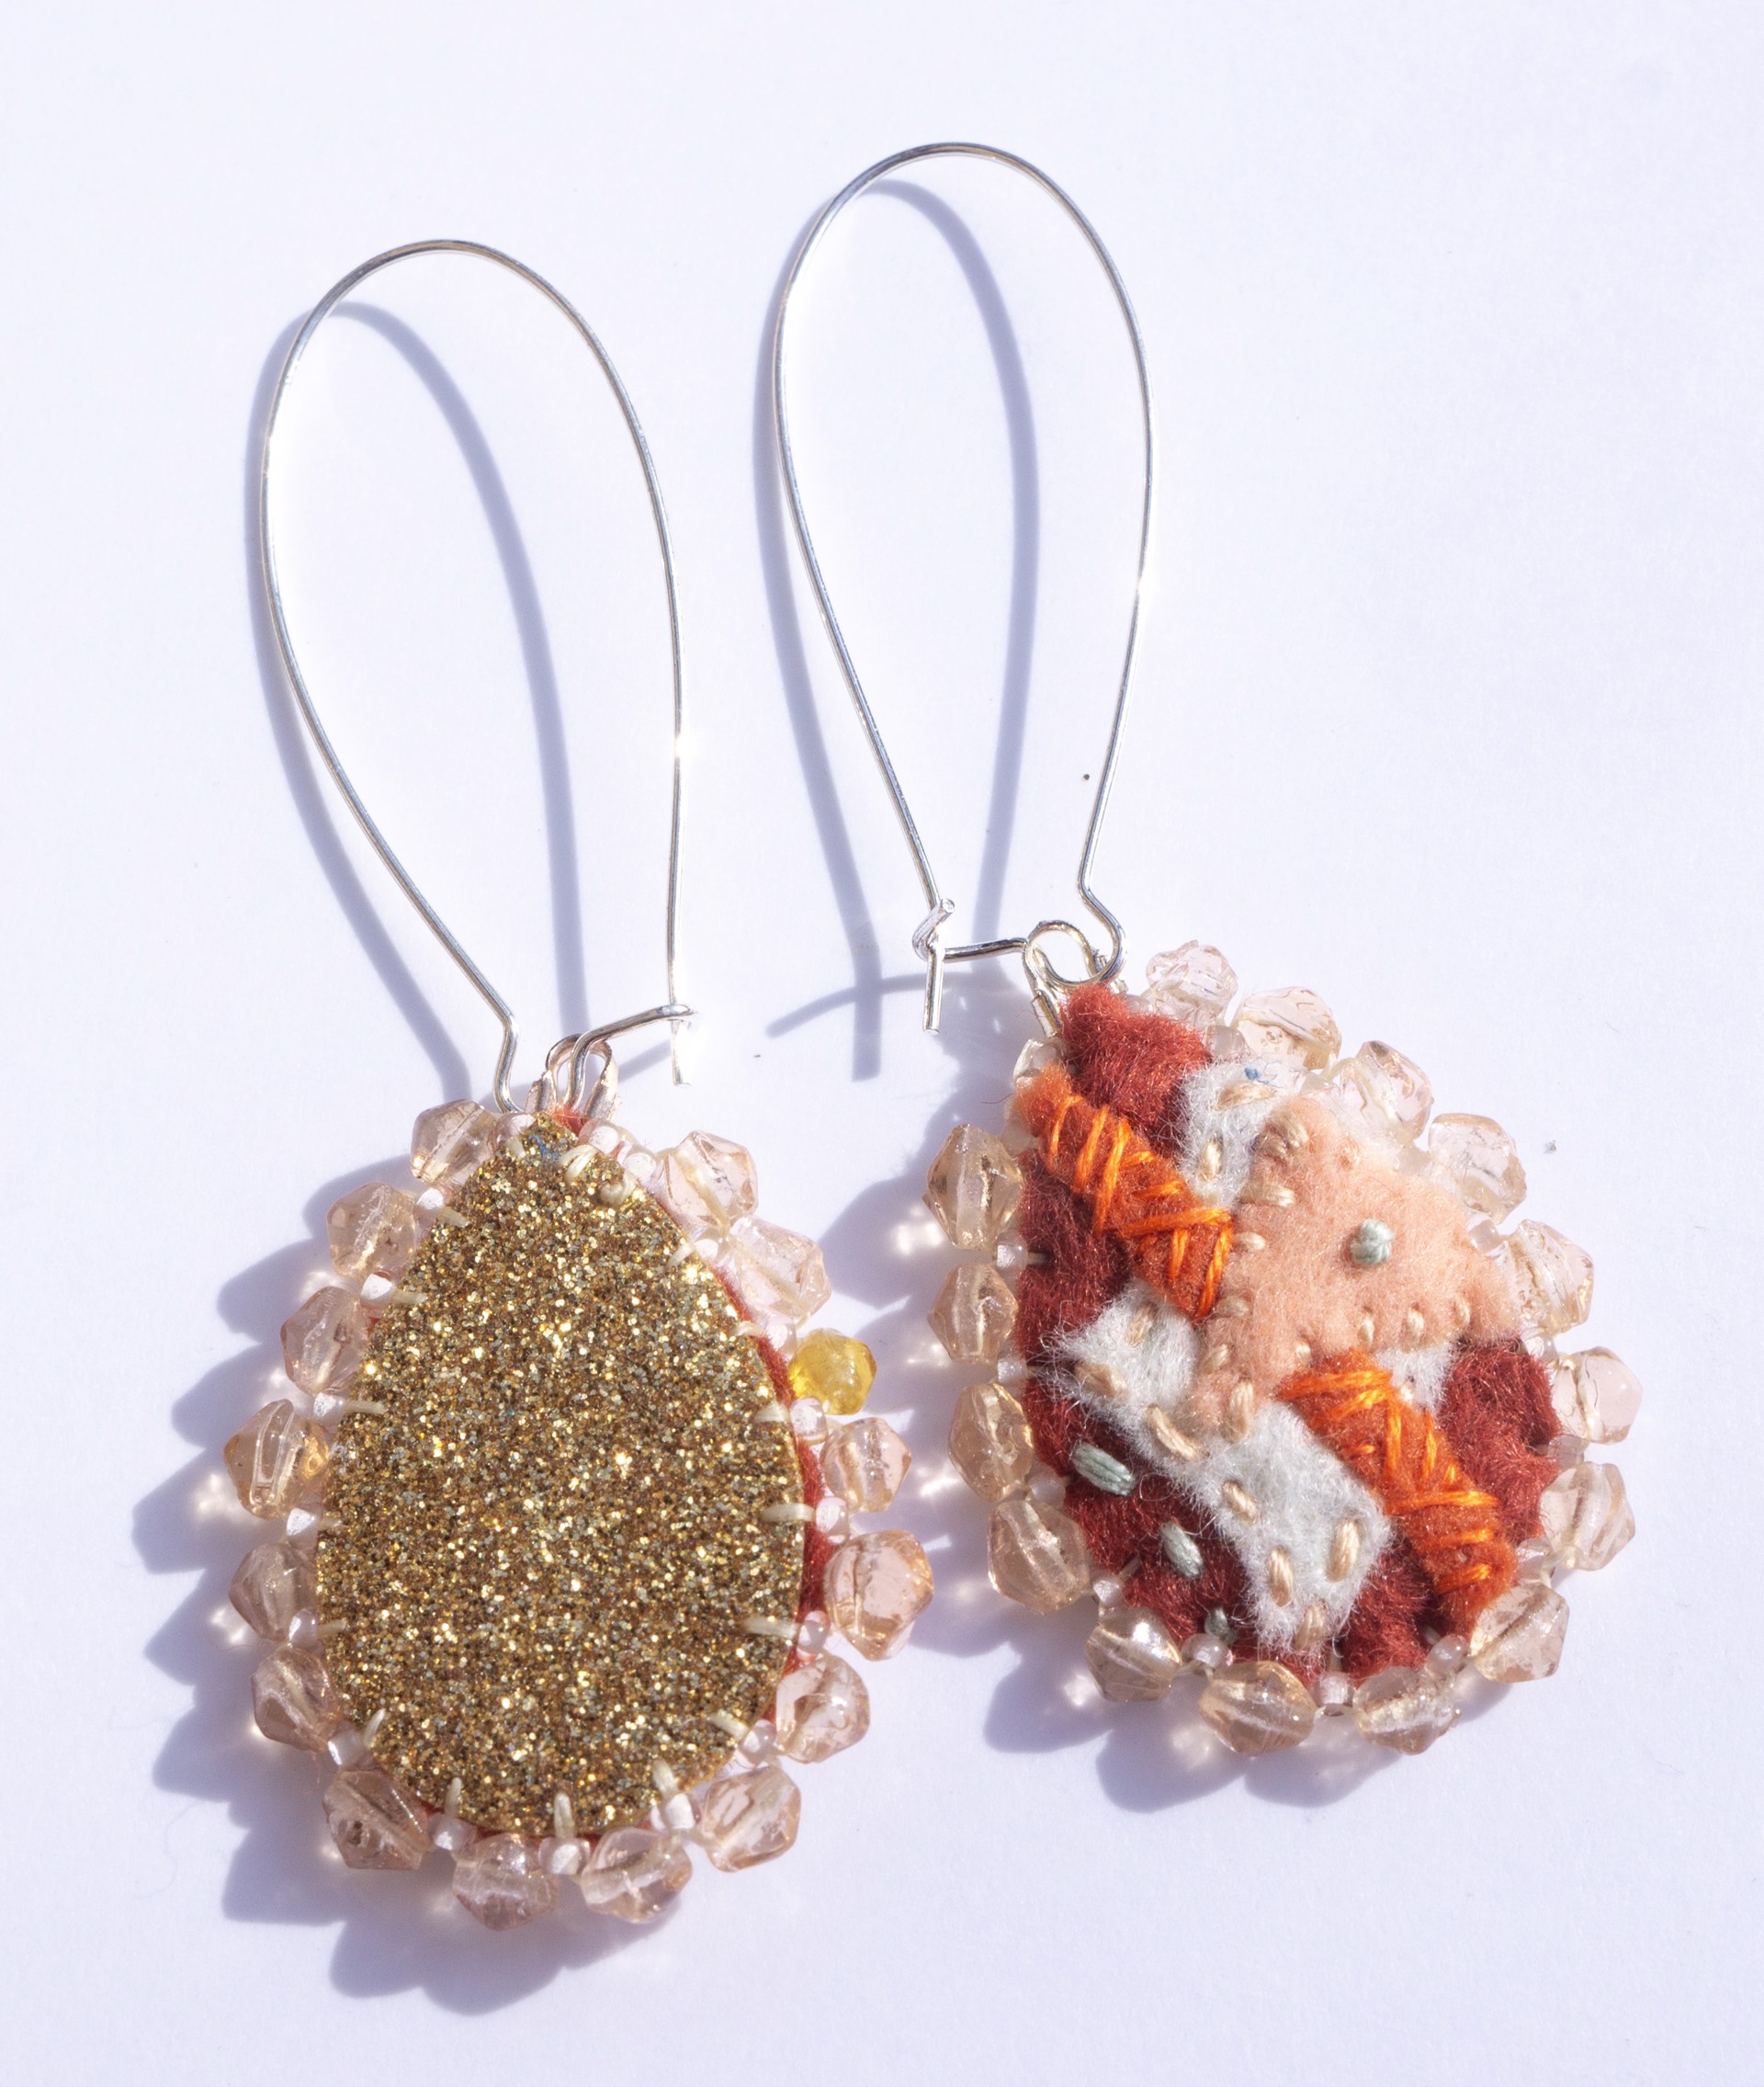 Orange embroidered earrings by Hattie Lee Mendoza